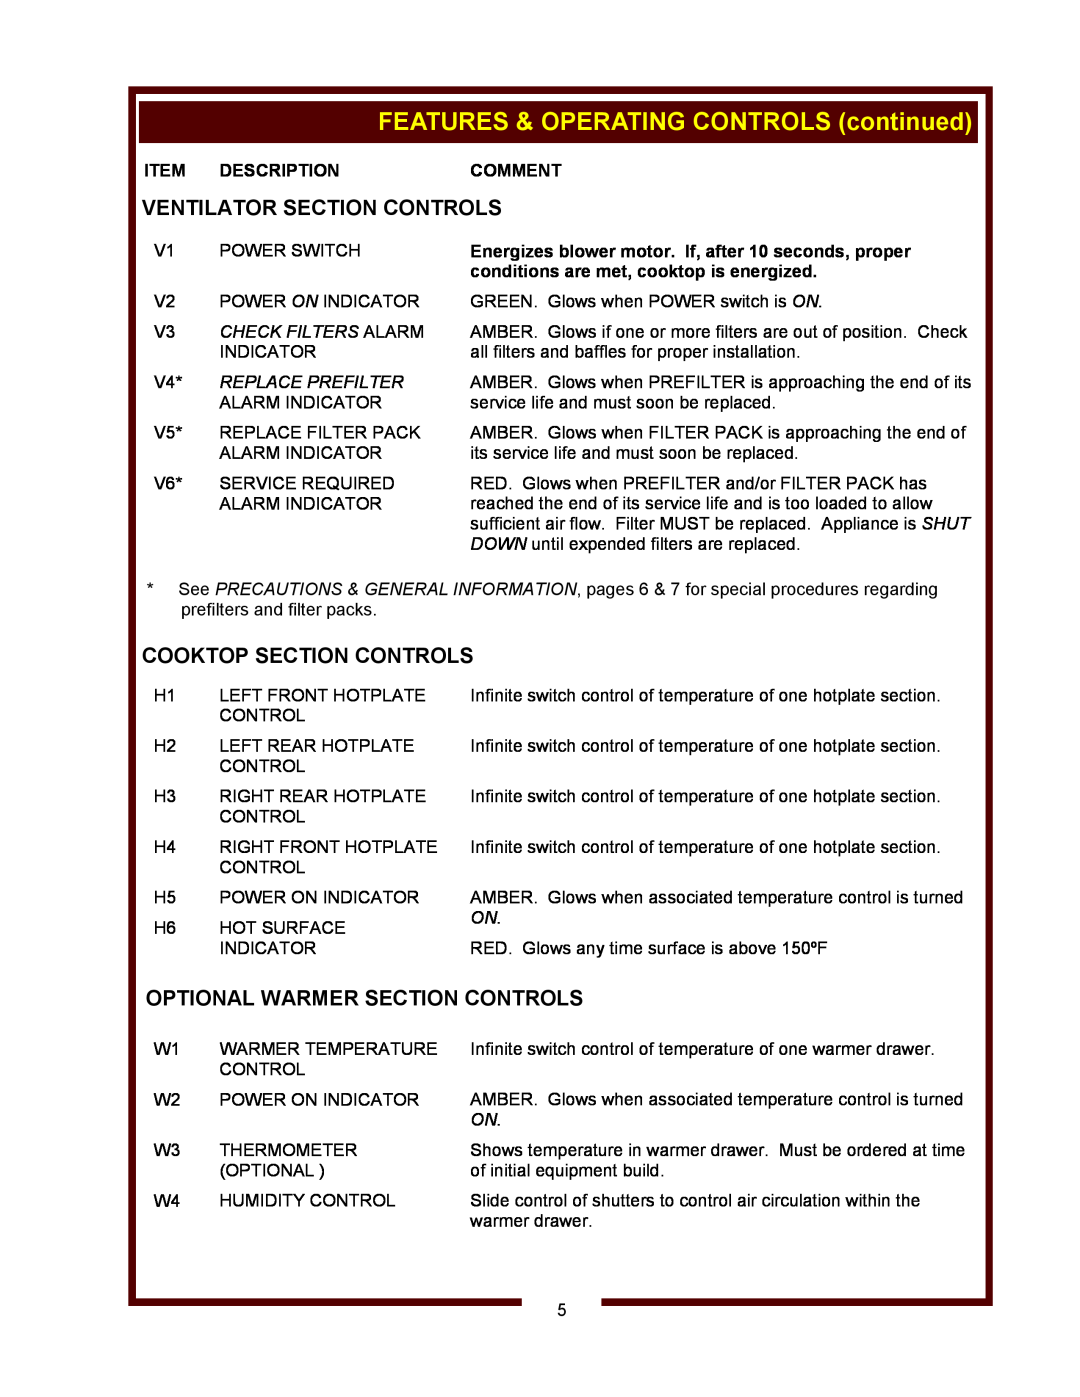 Wells WV-4HSRW Ventilator Section Controls, Cooktop Section Controls, Optional Warmer Section Controls, Description 